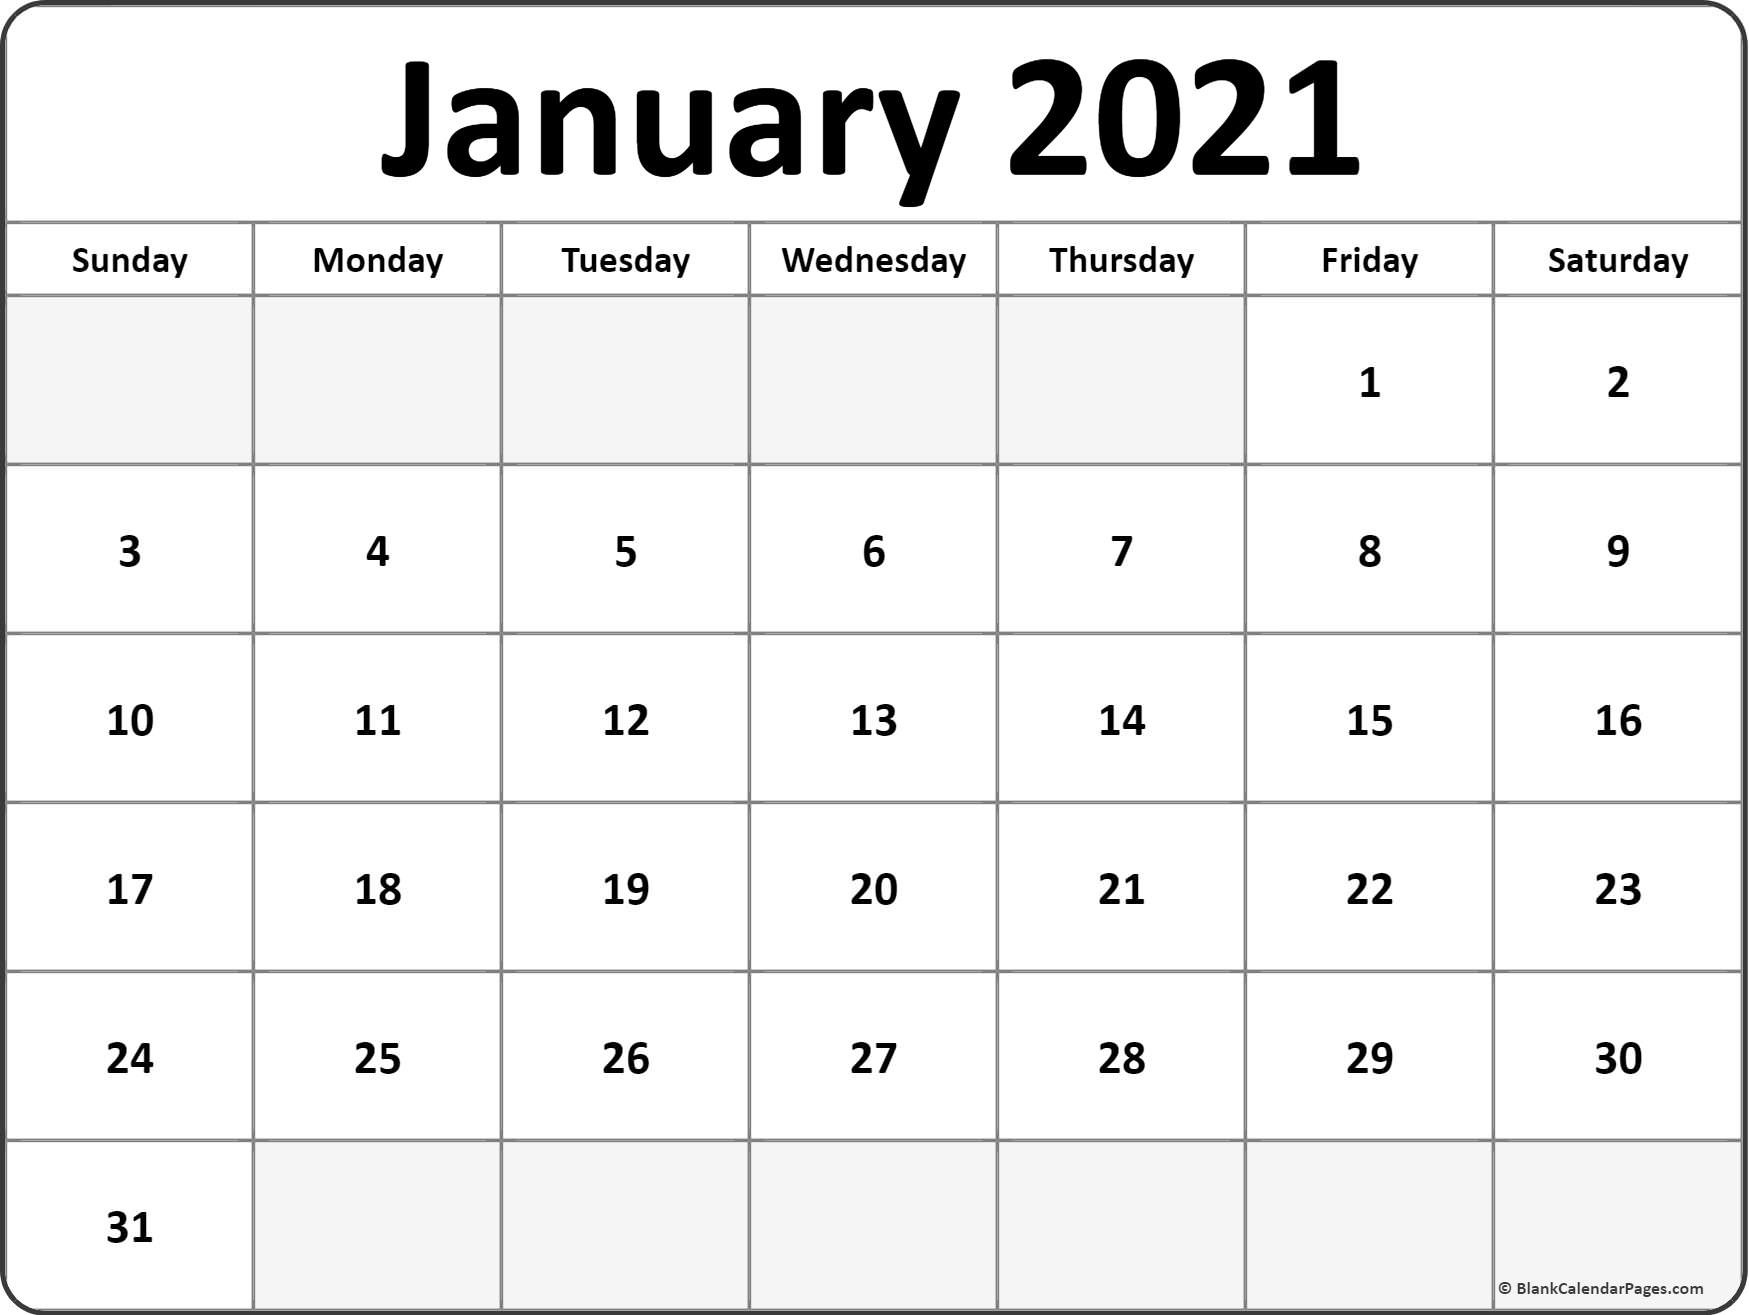 January 2021 Blank Calendar Collection. December 2020 January 2021 Calendar Template